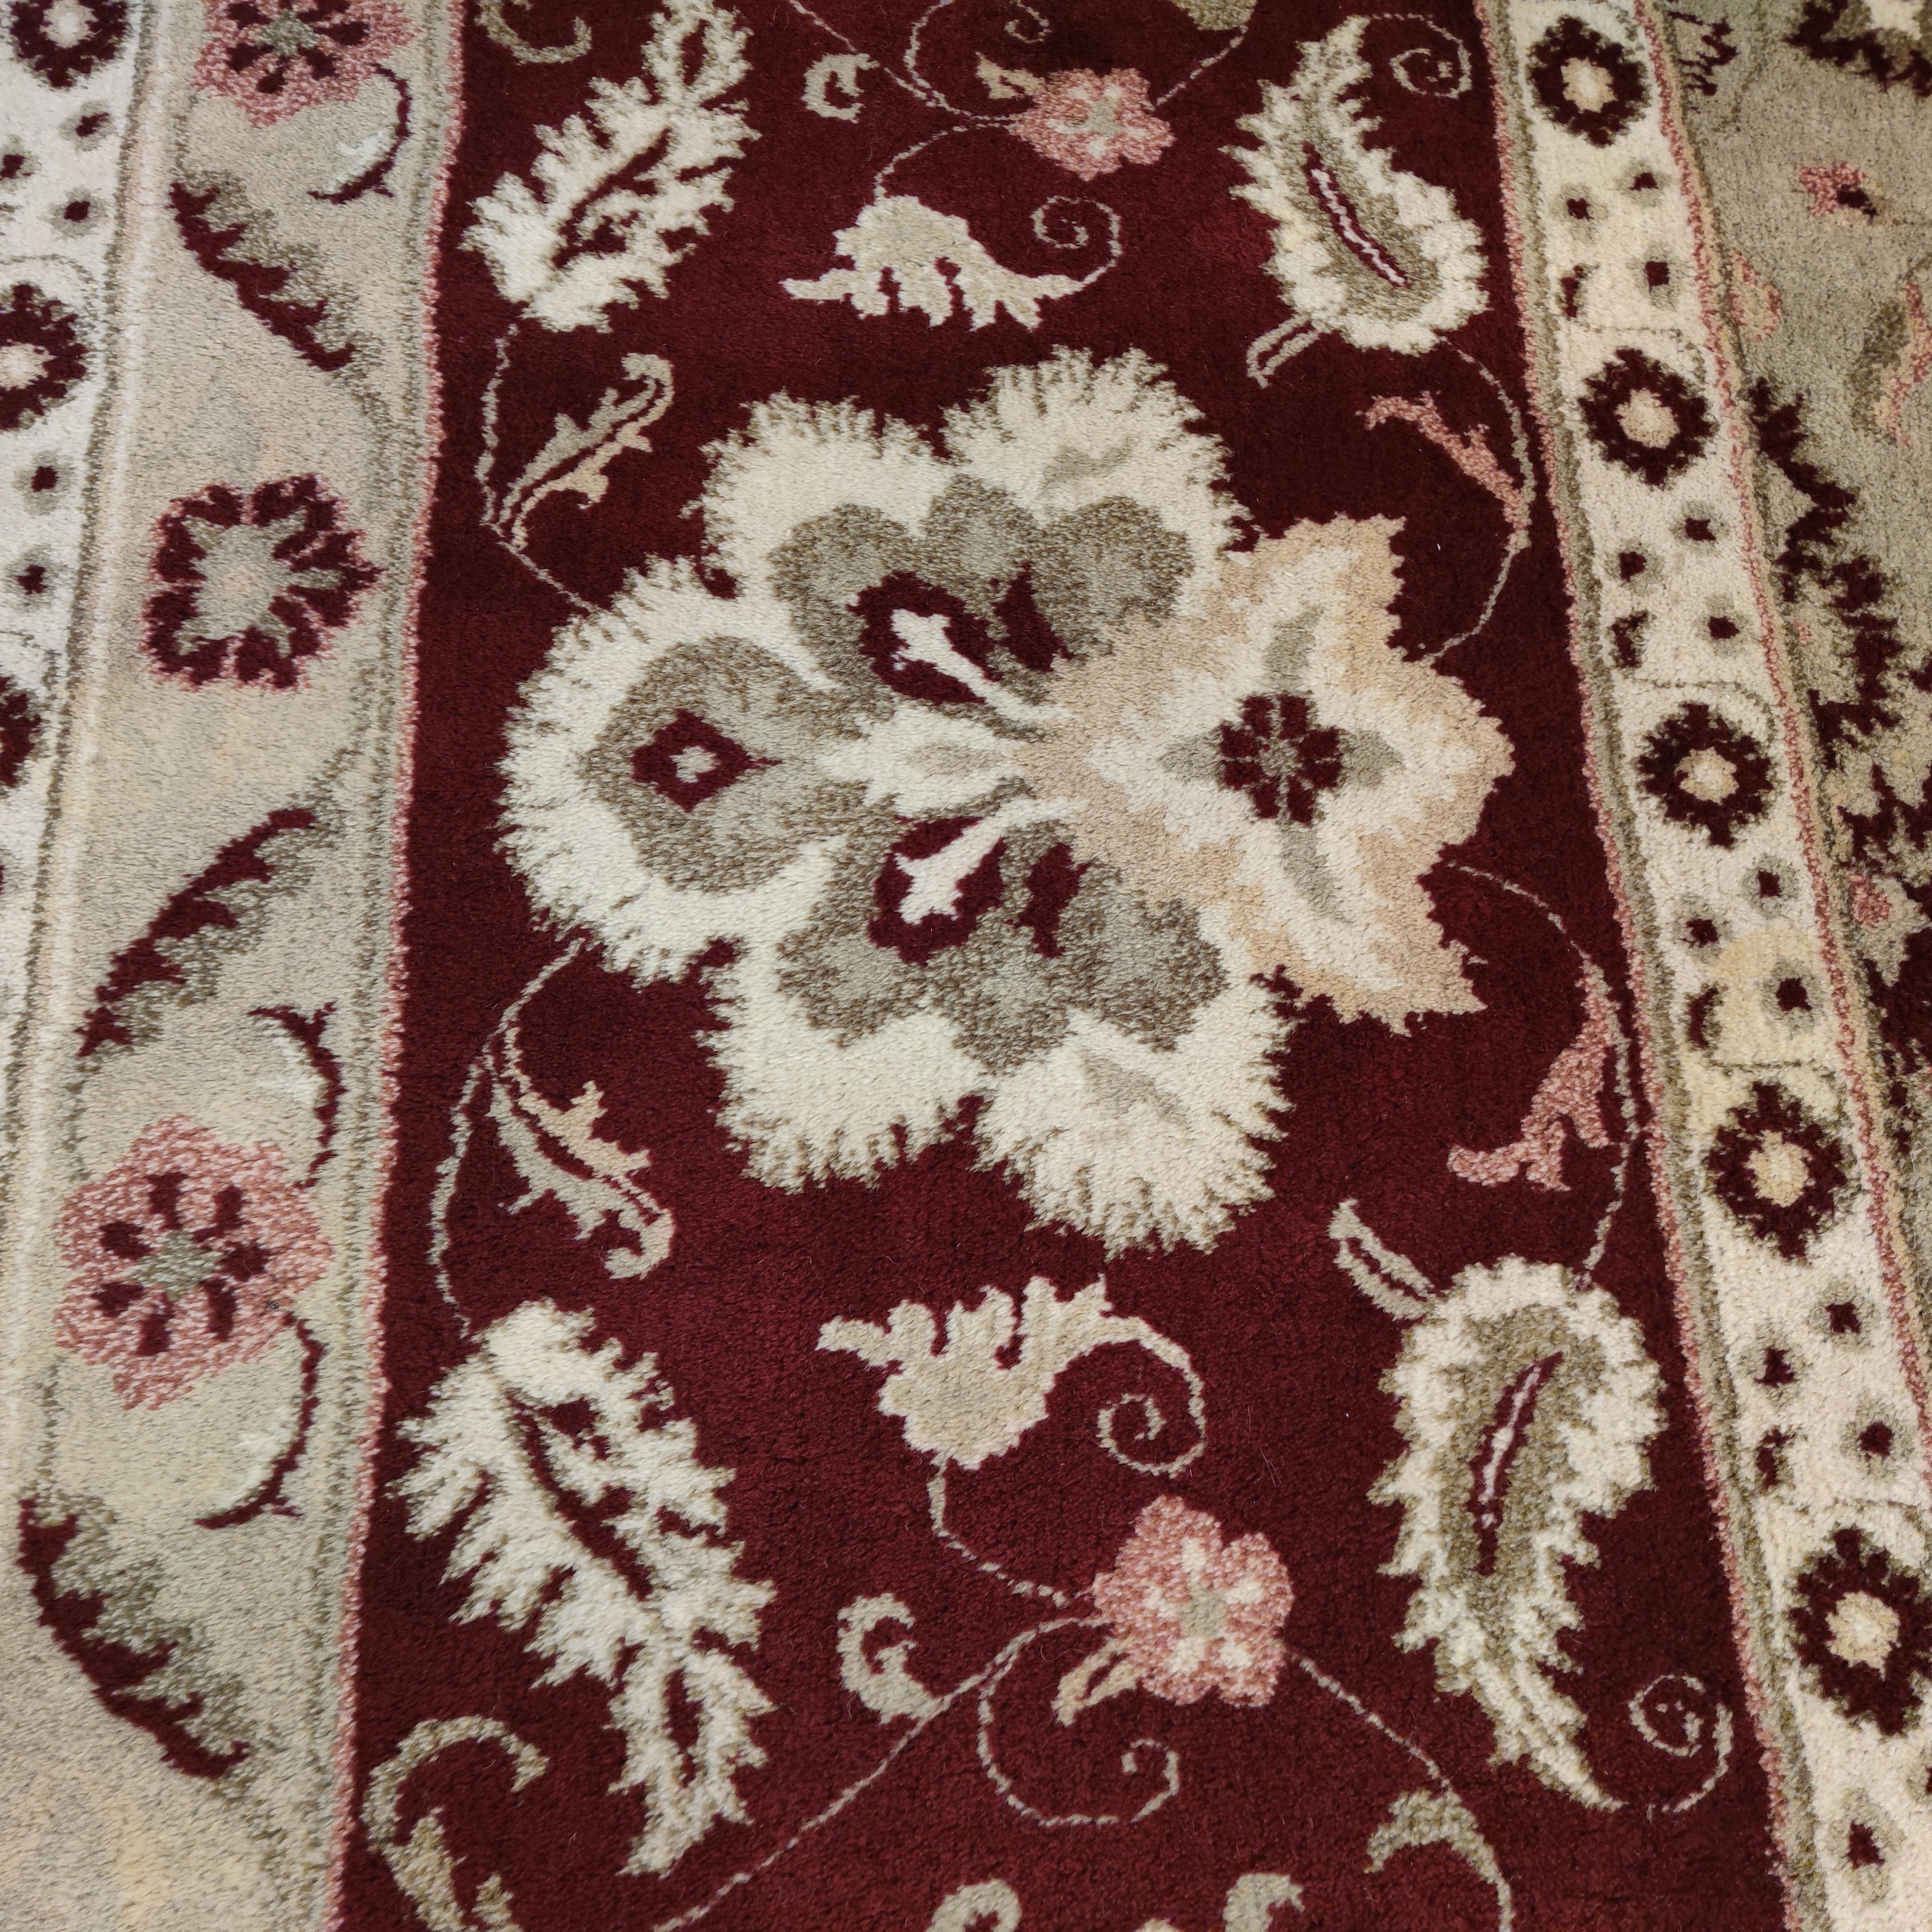 Oversize Vintage Celadon Green All-Over Design Agra Carpet with Ruby Red Border For Sale 2